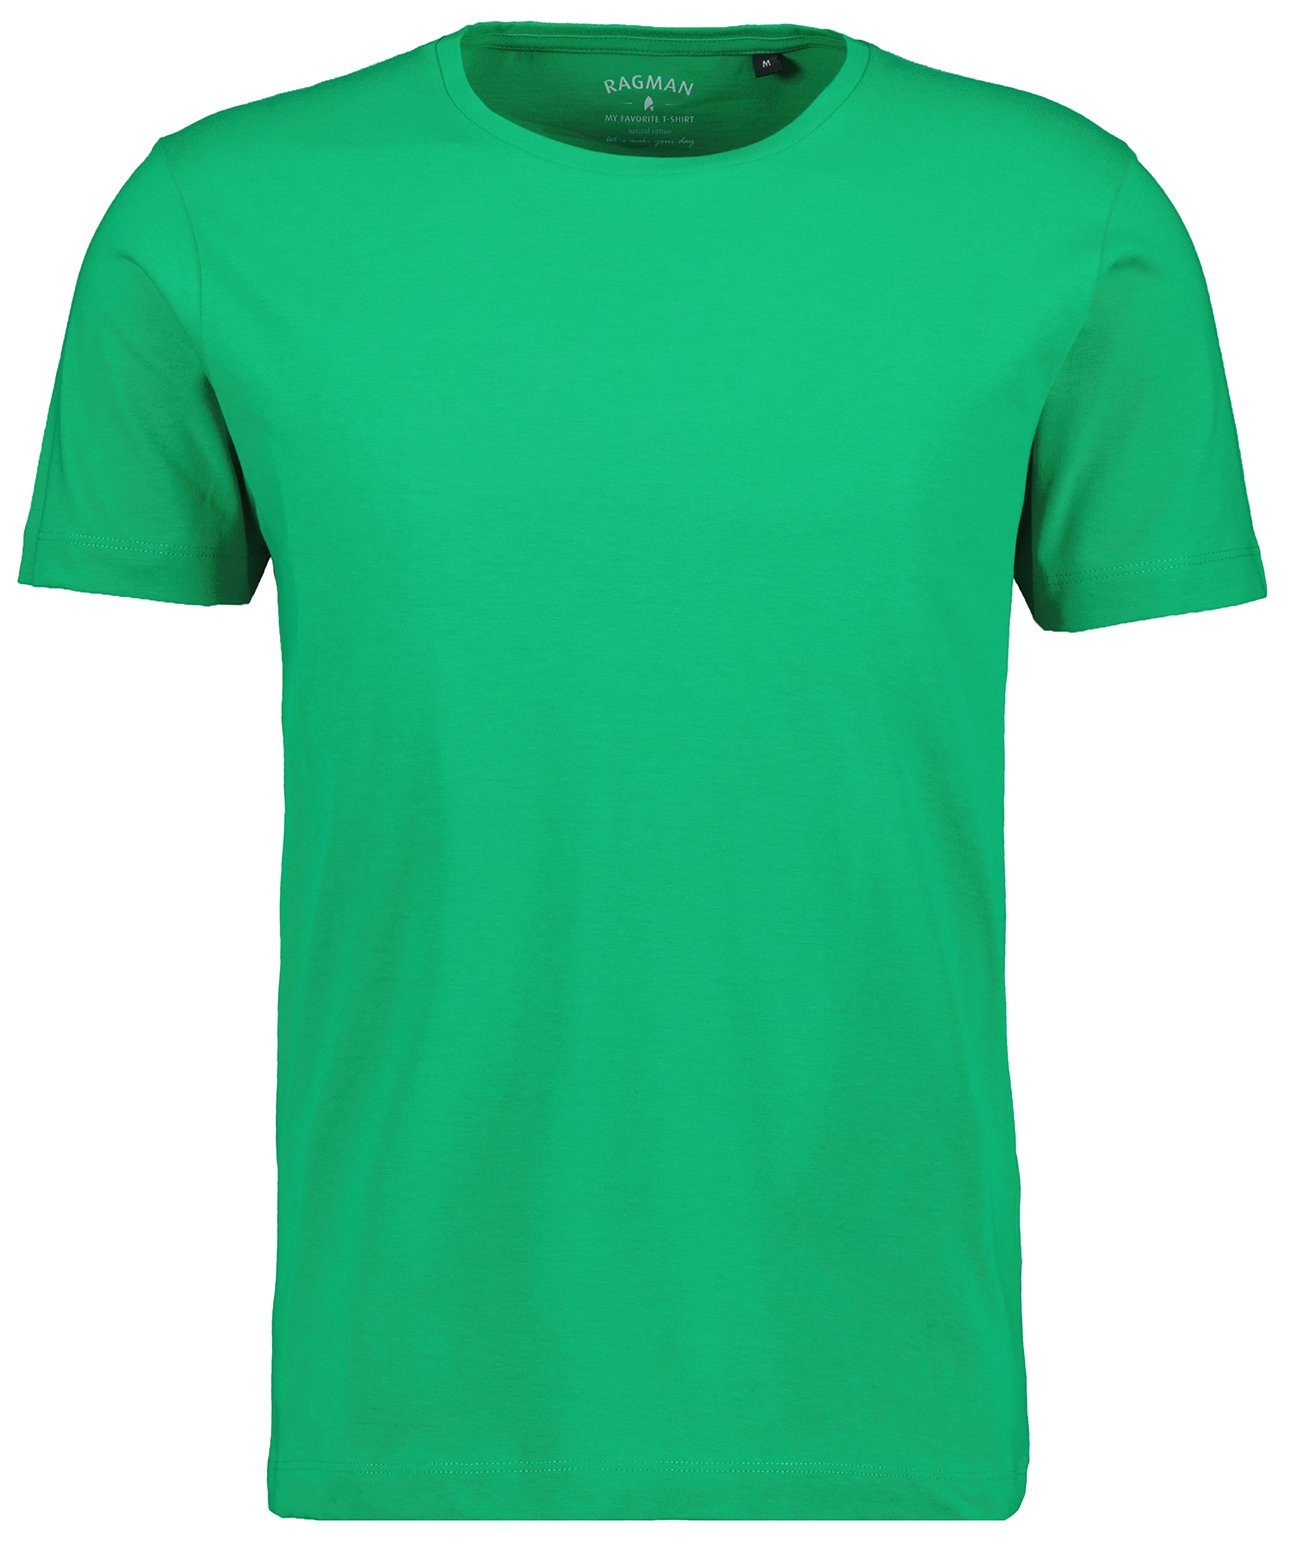 RAGMAN T-Shirt Electric Green-394